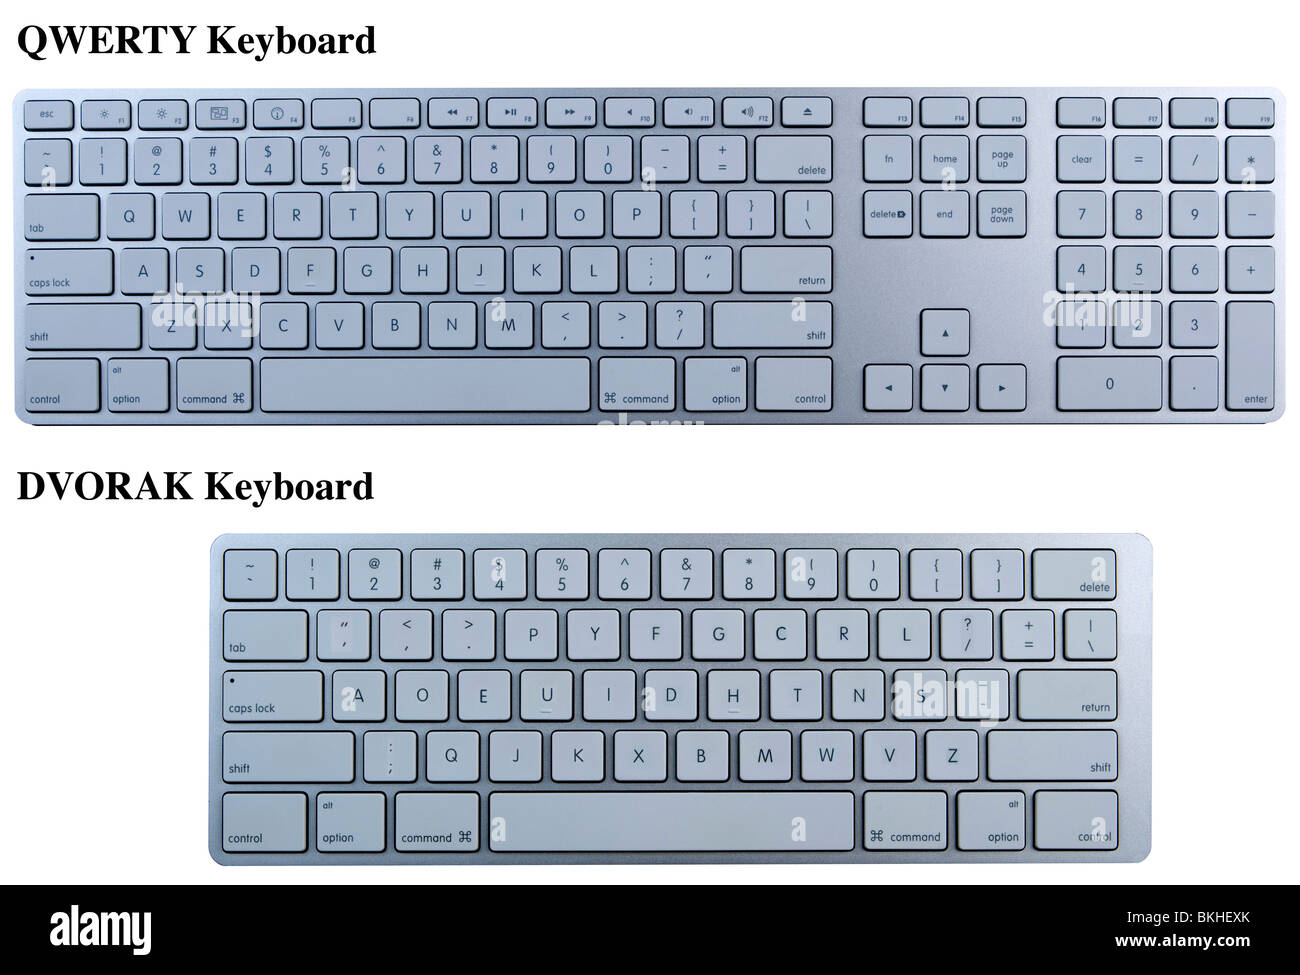 Qwerty Keyboard Layout Diagram